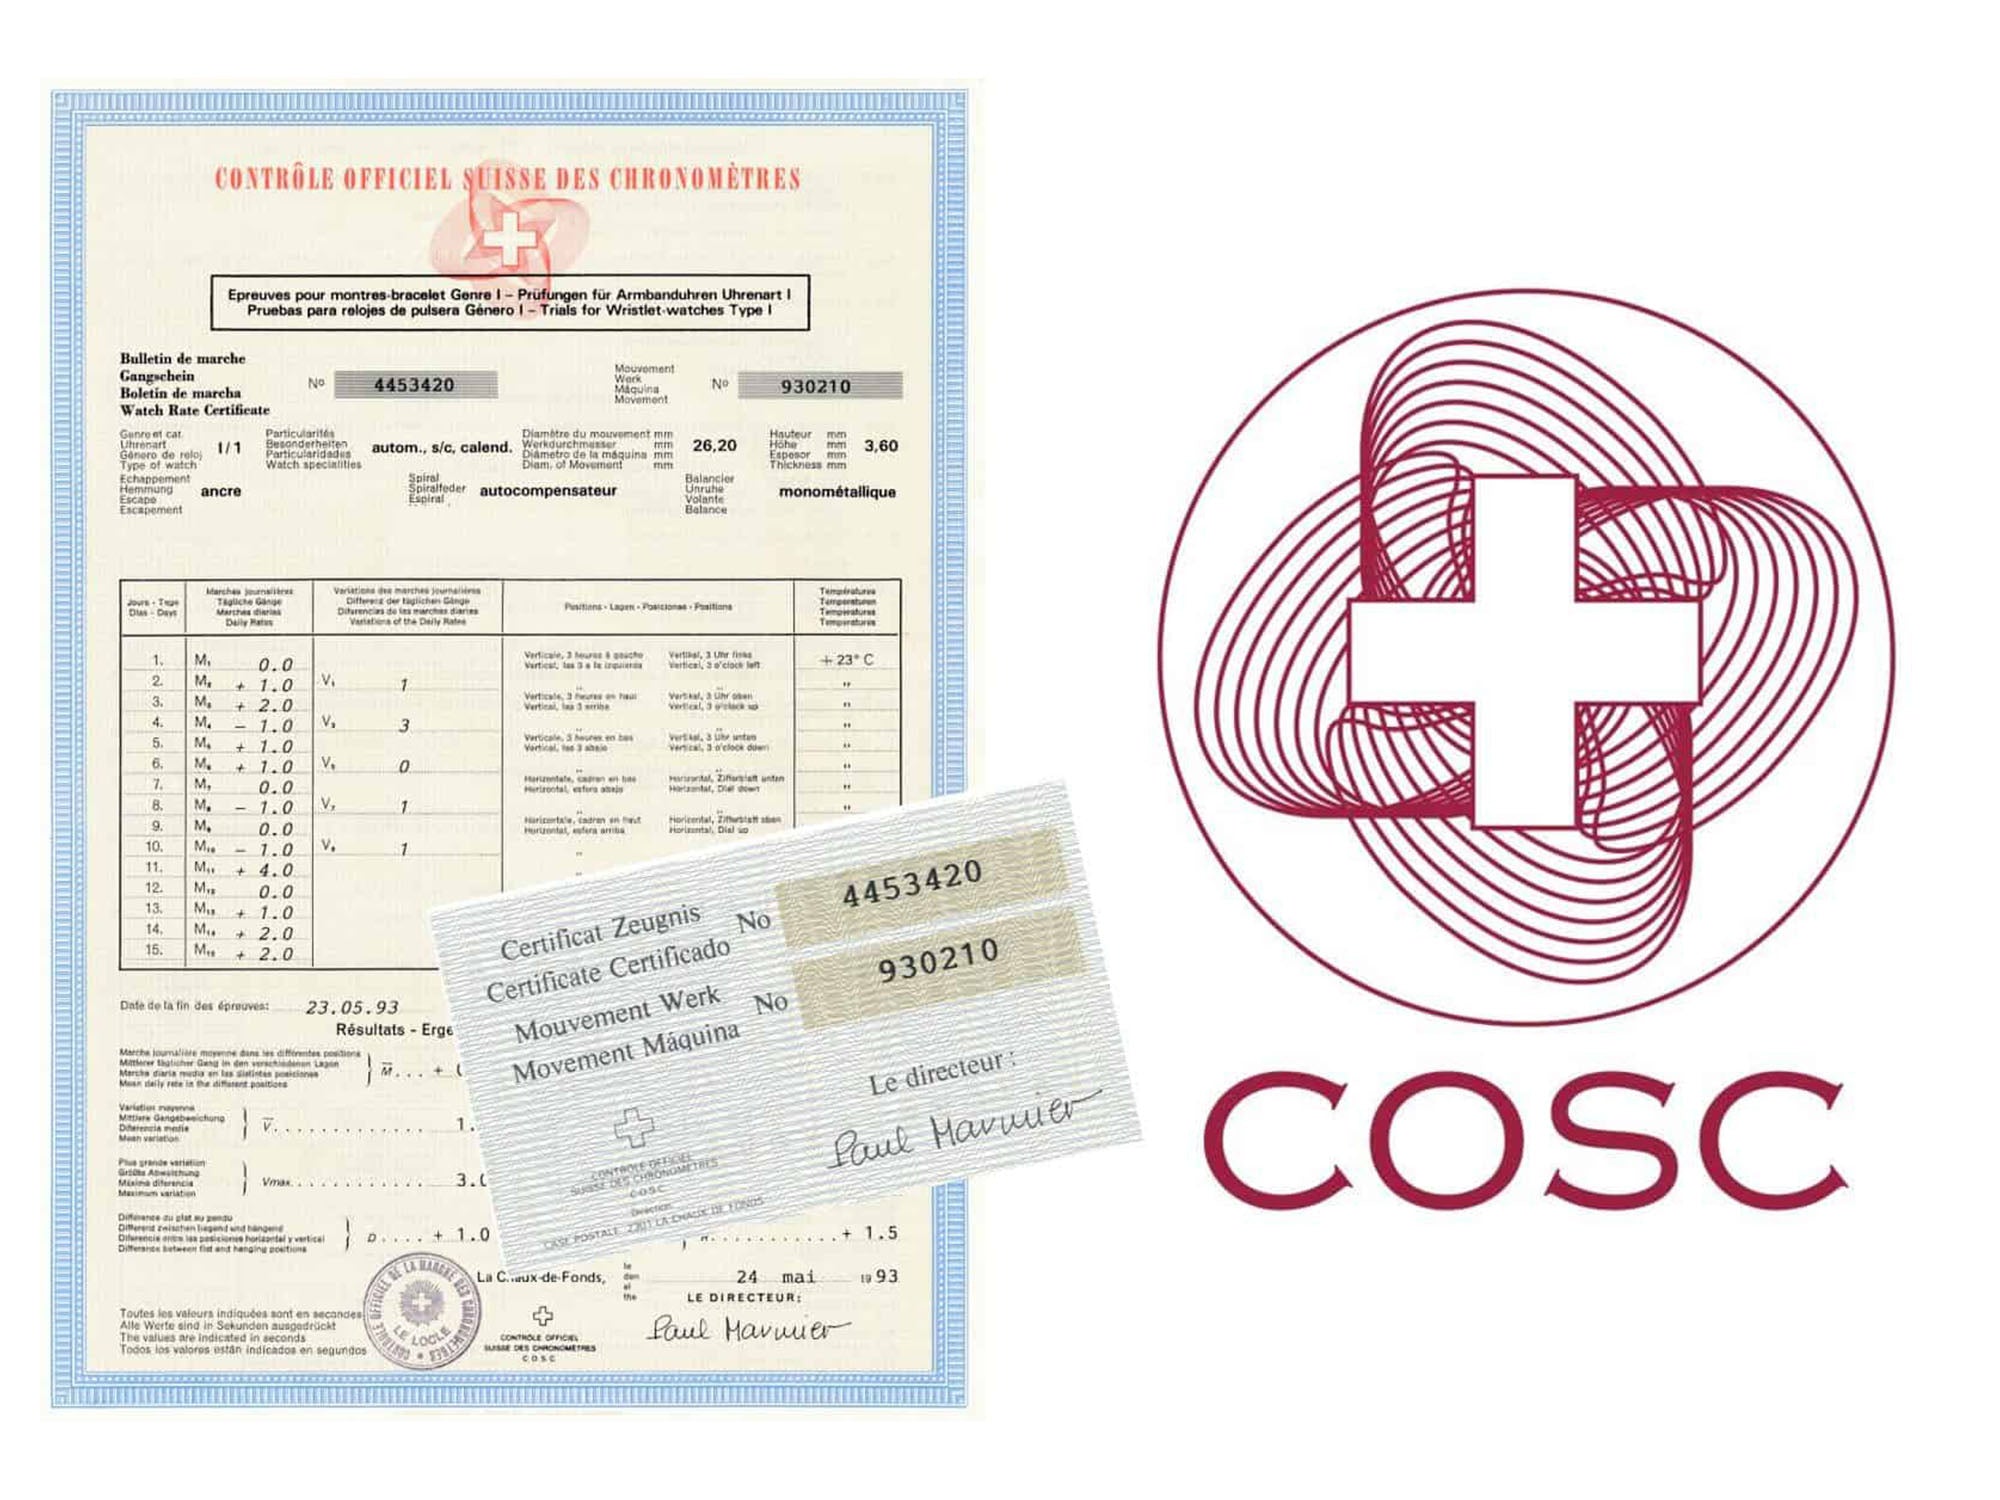 COSC chronometer certificate